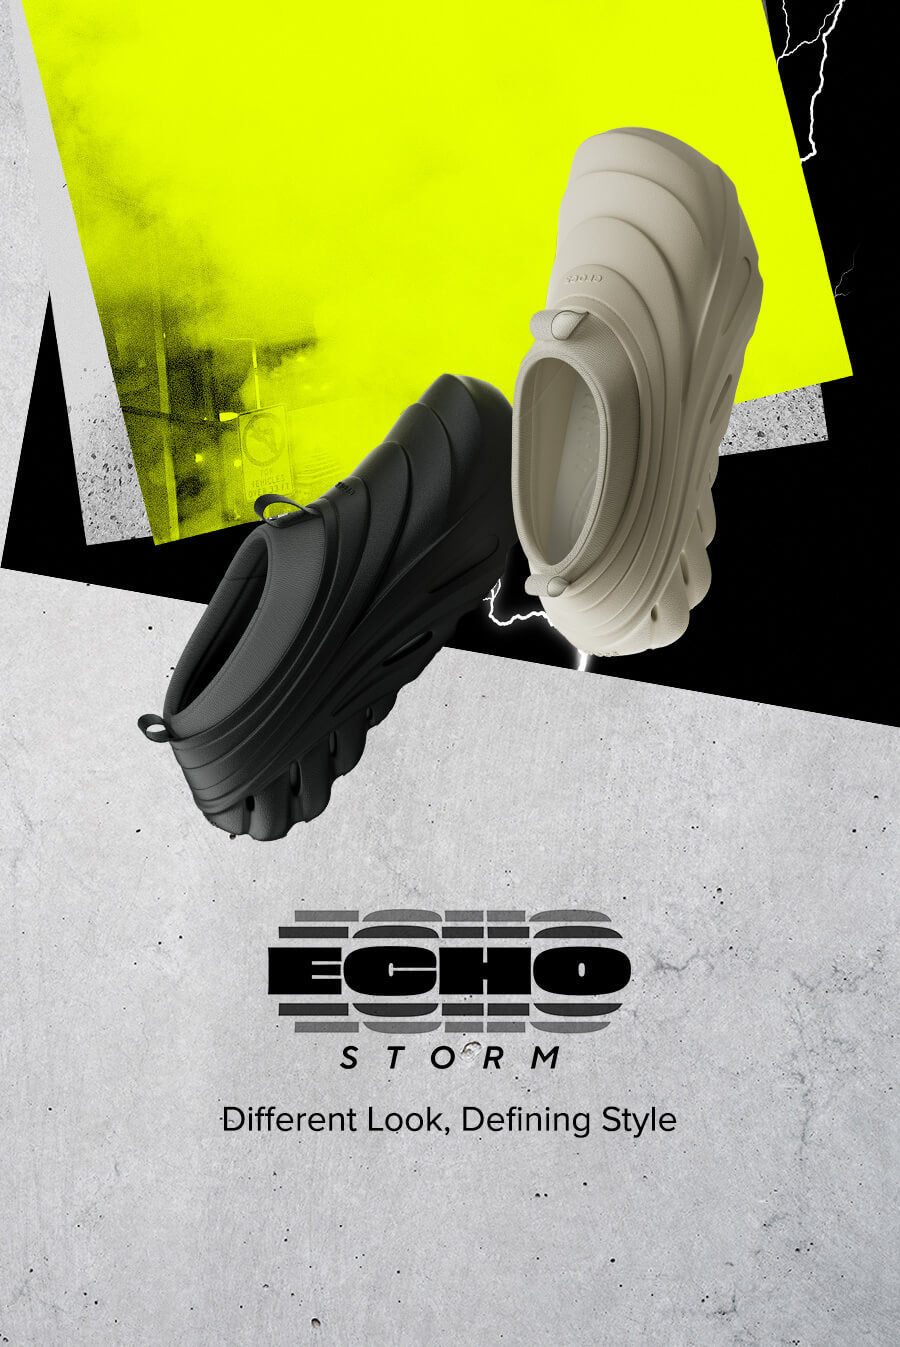 Echo Storm